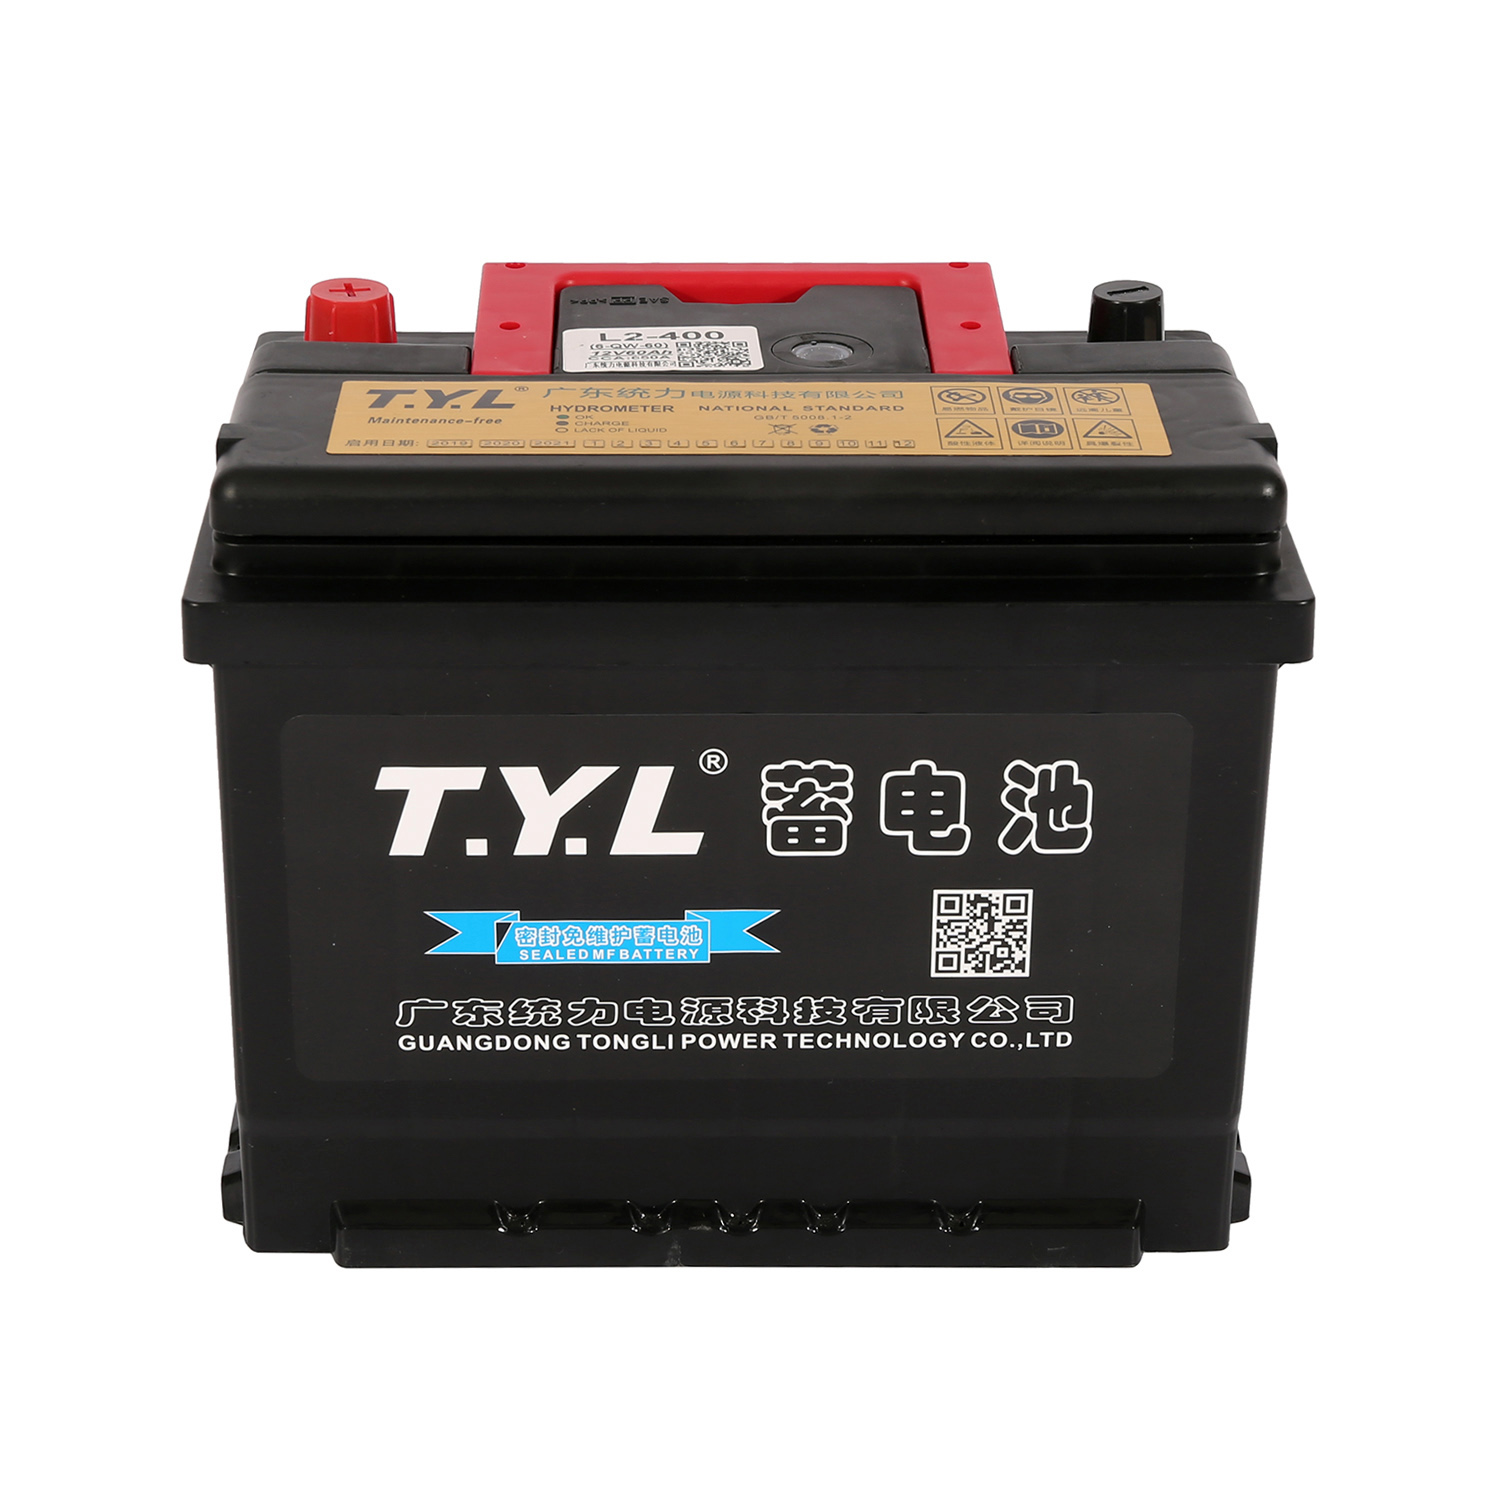 L2 400/ 55530/54583 12V60AH Rectangular High Performance Car Battery For Electric Vehicles